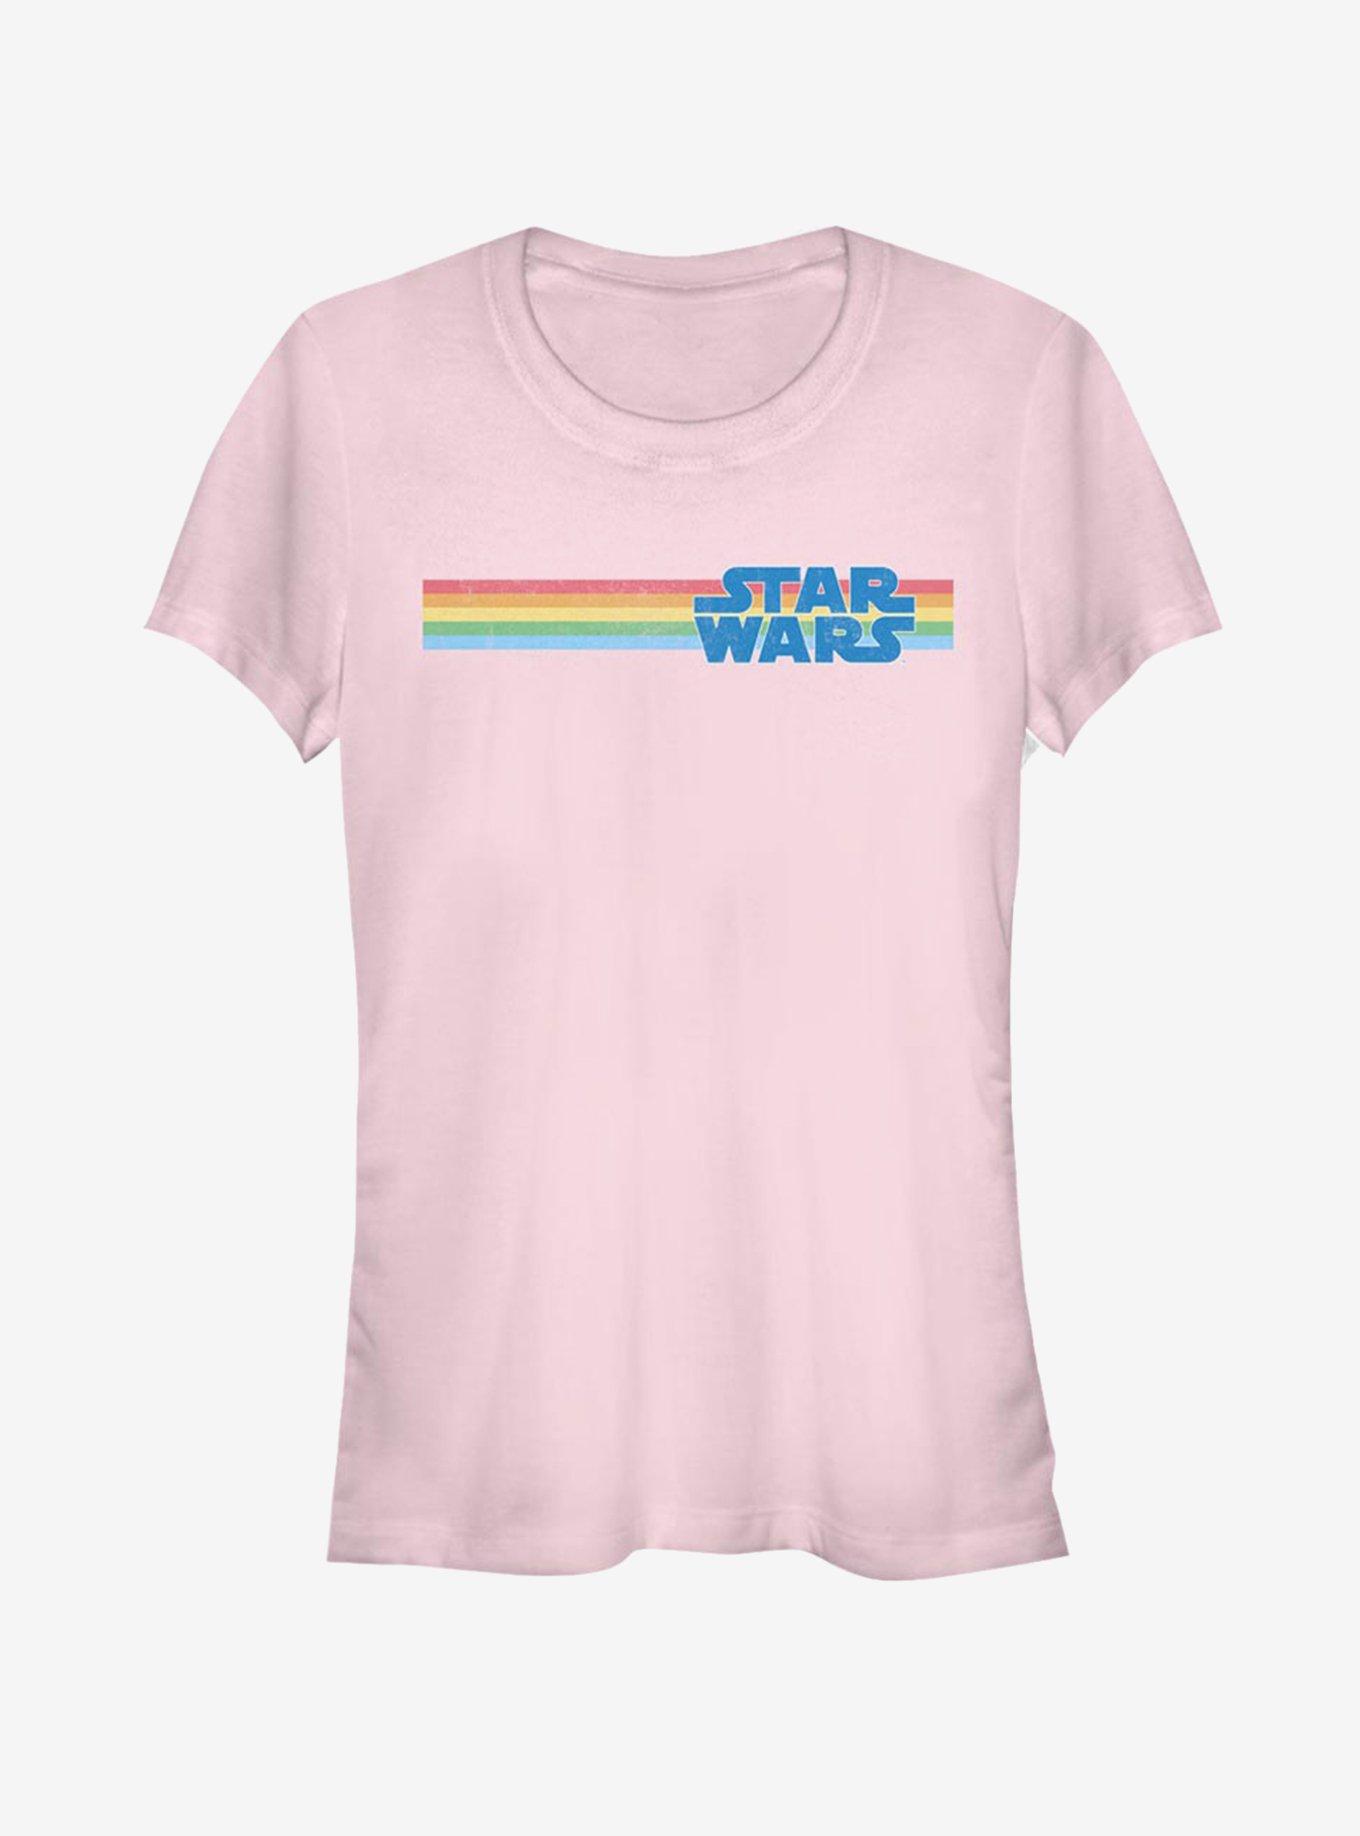 Star Wars Star Wars Logo Multi Stripe Spot Girls T-Shirt, LIGHT PINK, hi-res